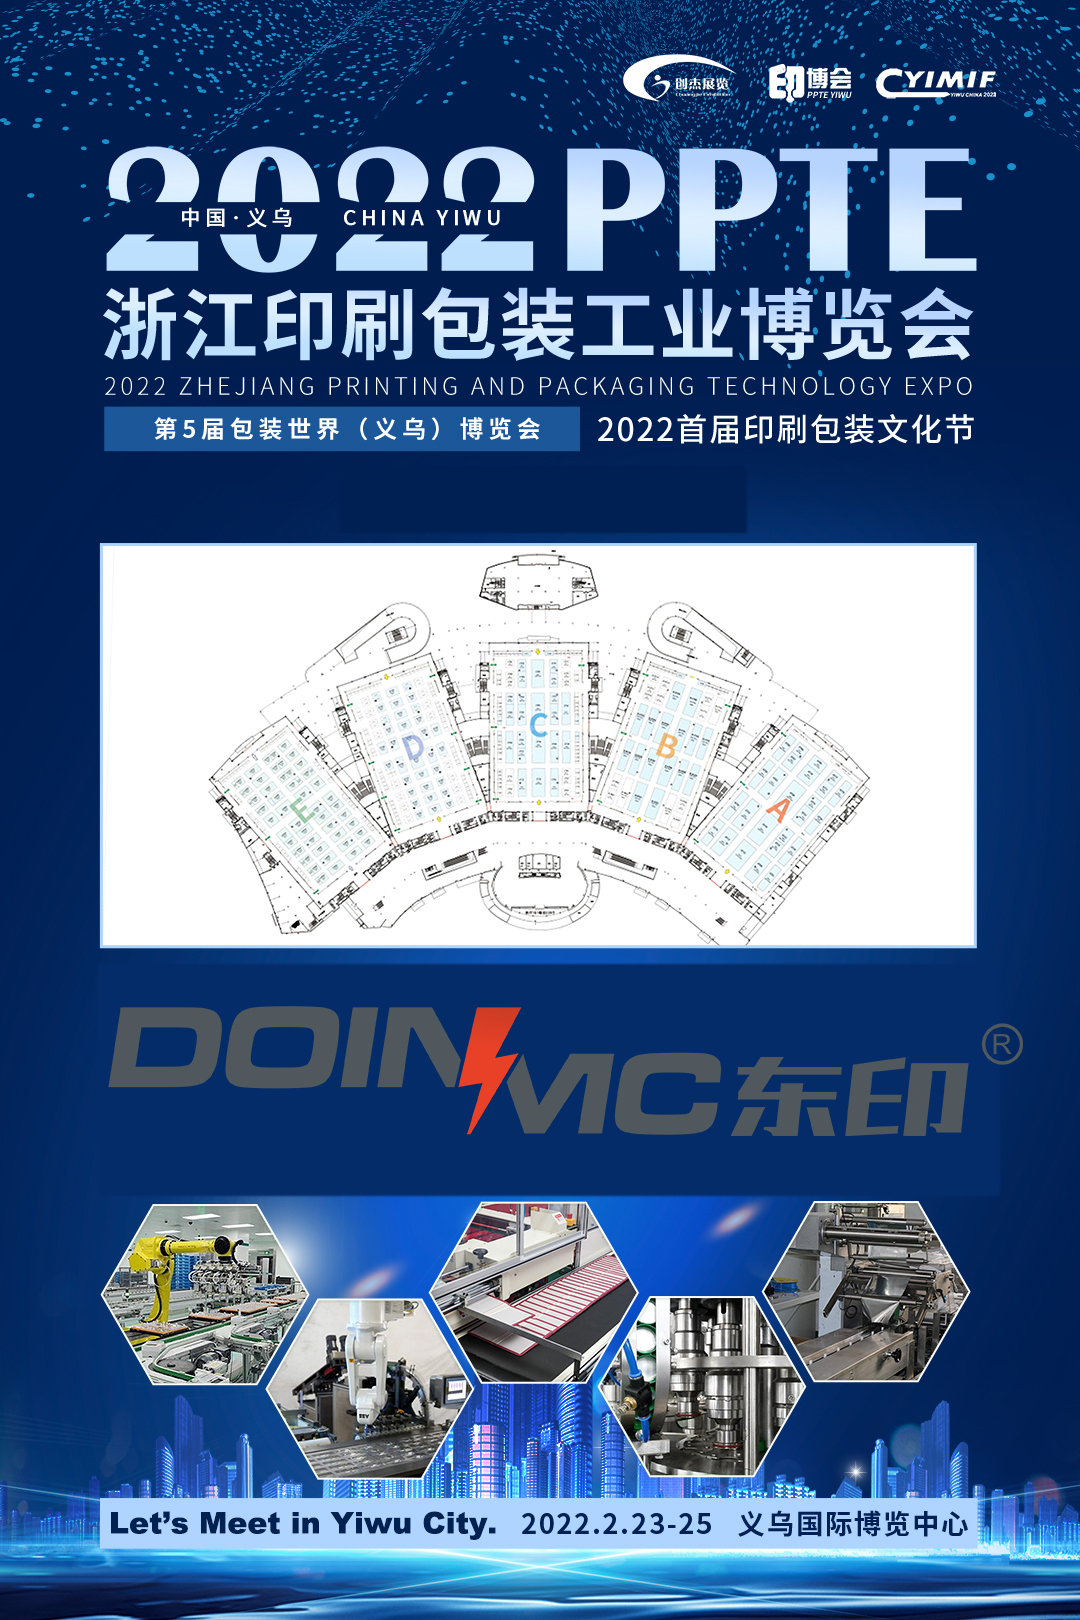 2022 Zhejiang Printing and Packing Technology Expo-DOINMC machinery.jpg